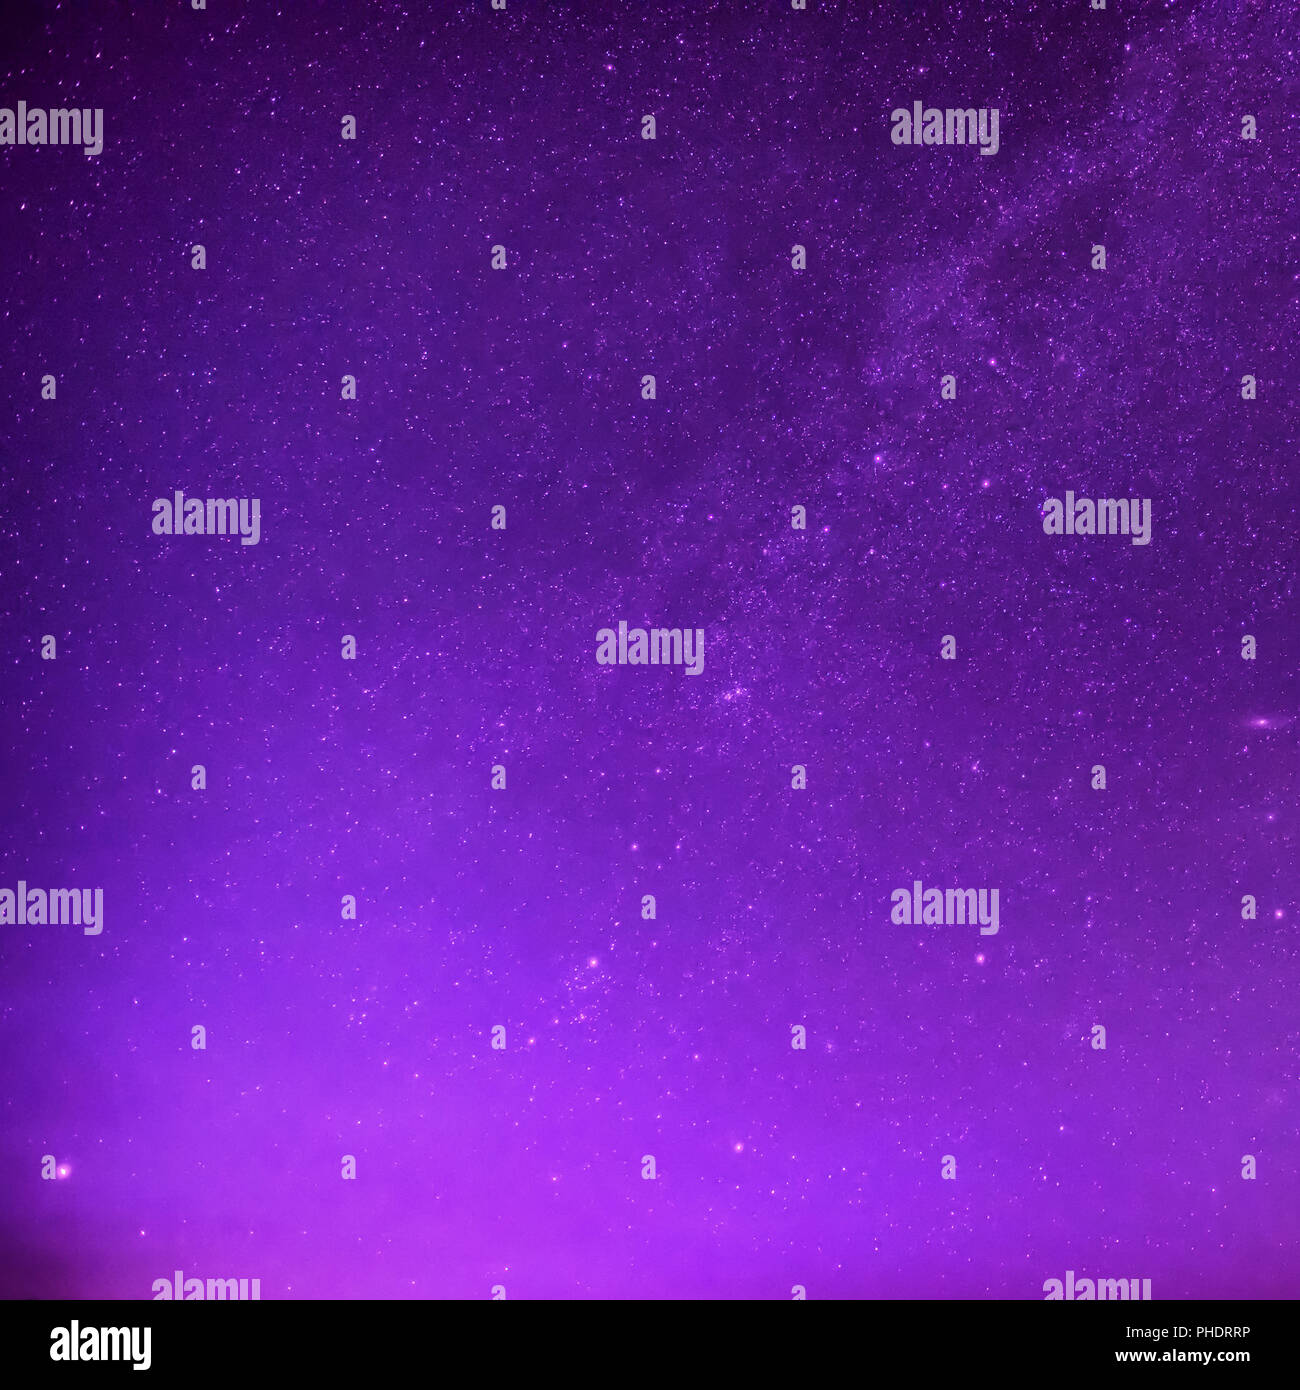 Beautiful purple night sky with many stars Stock Photo